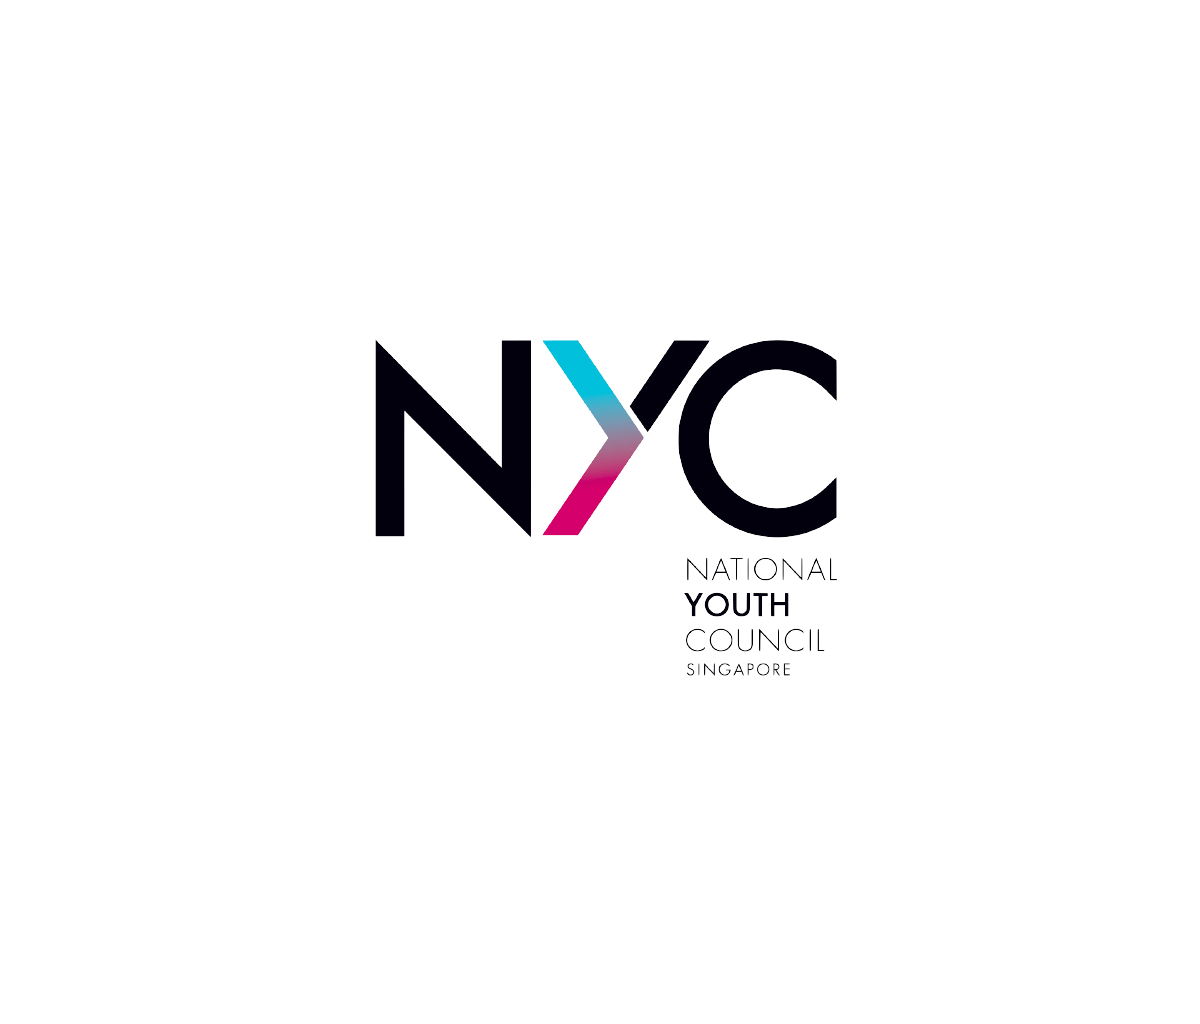 nyc-logo